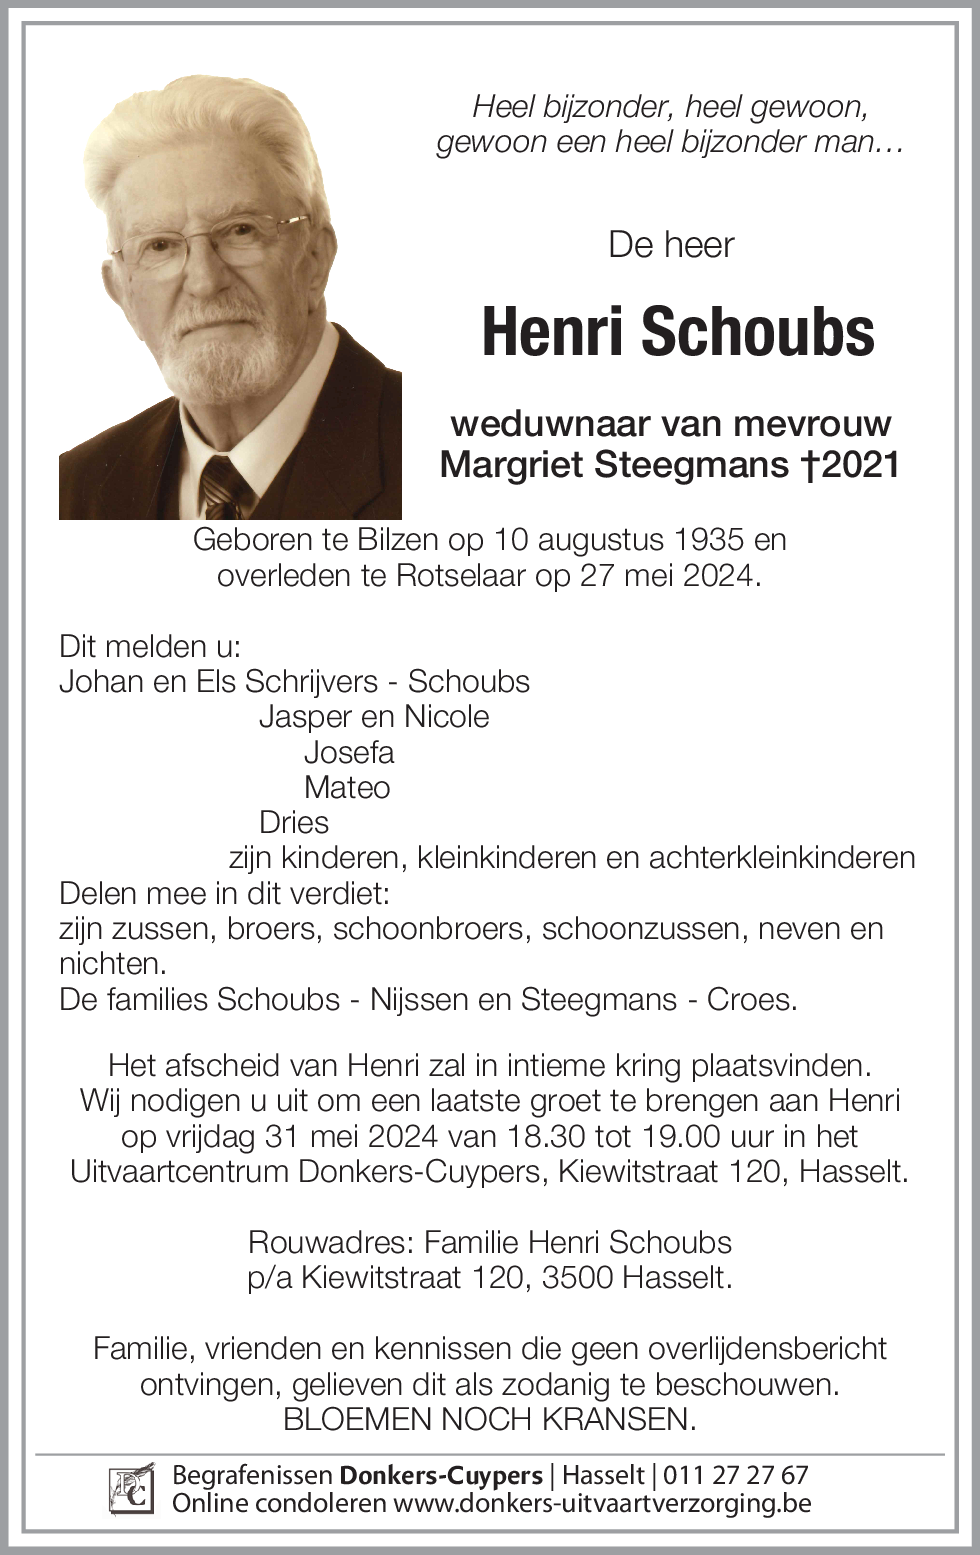 Henri Schoubs